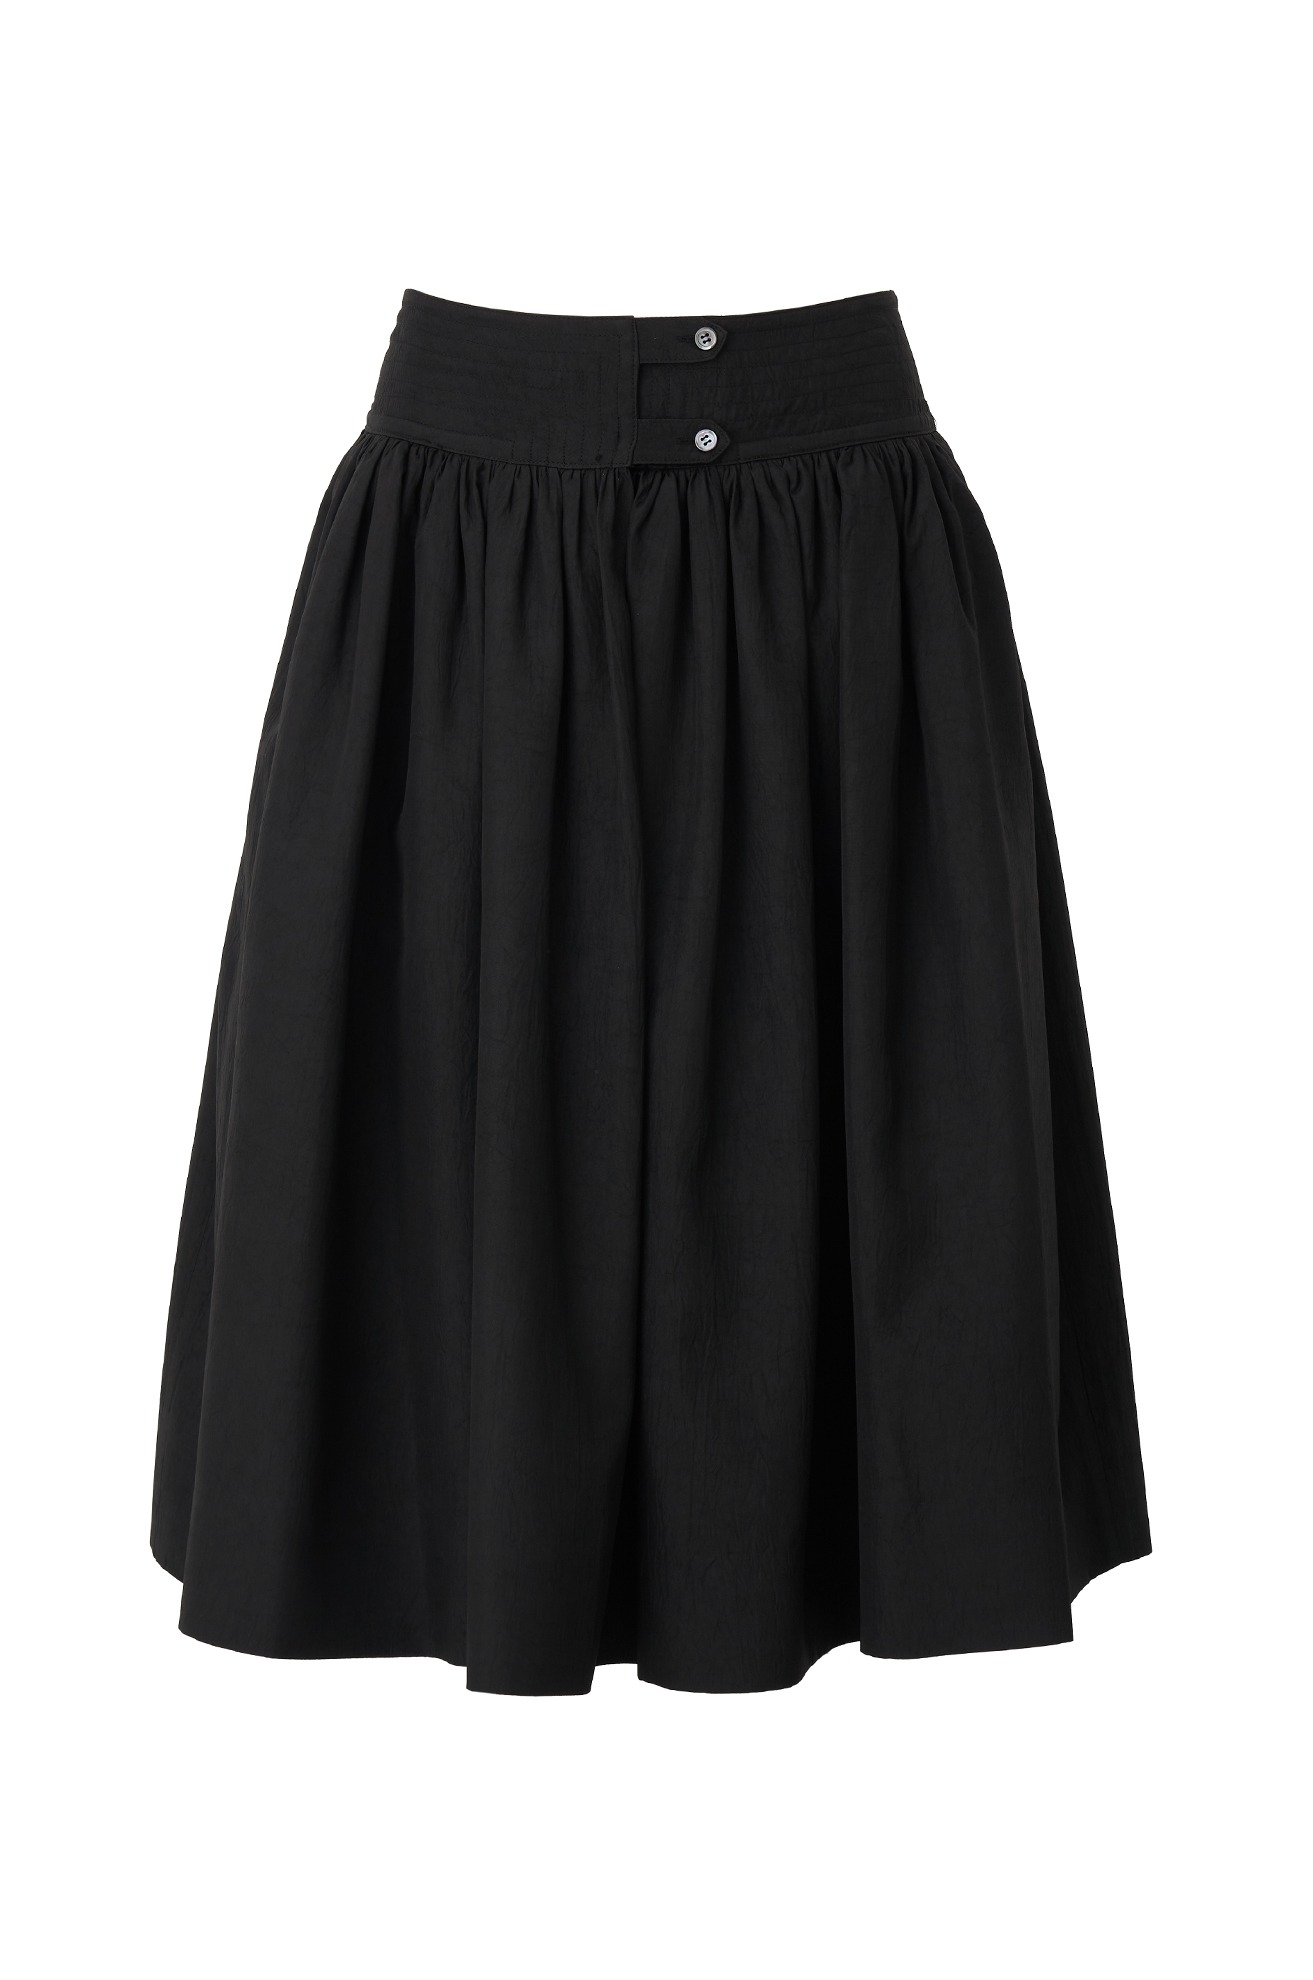 Stitch Skirt (Black)